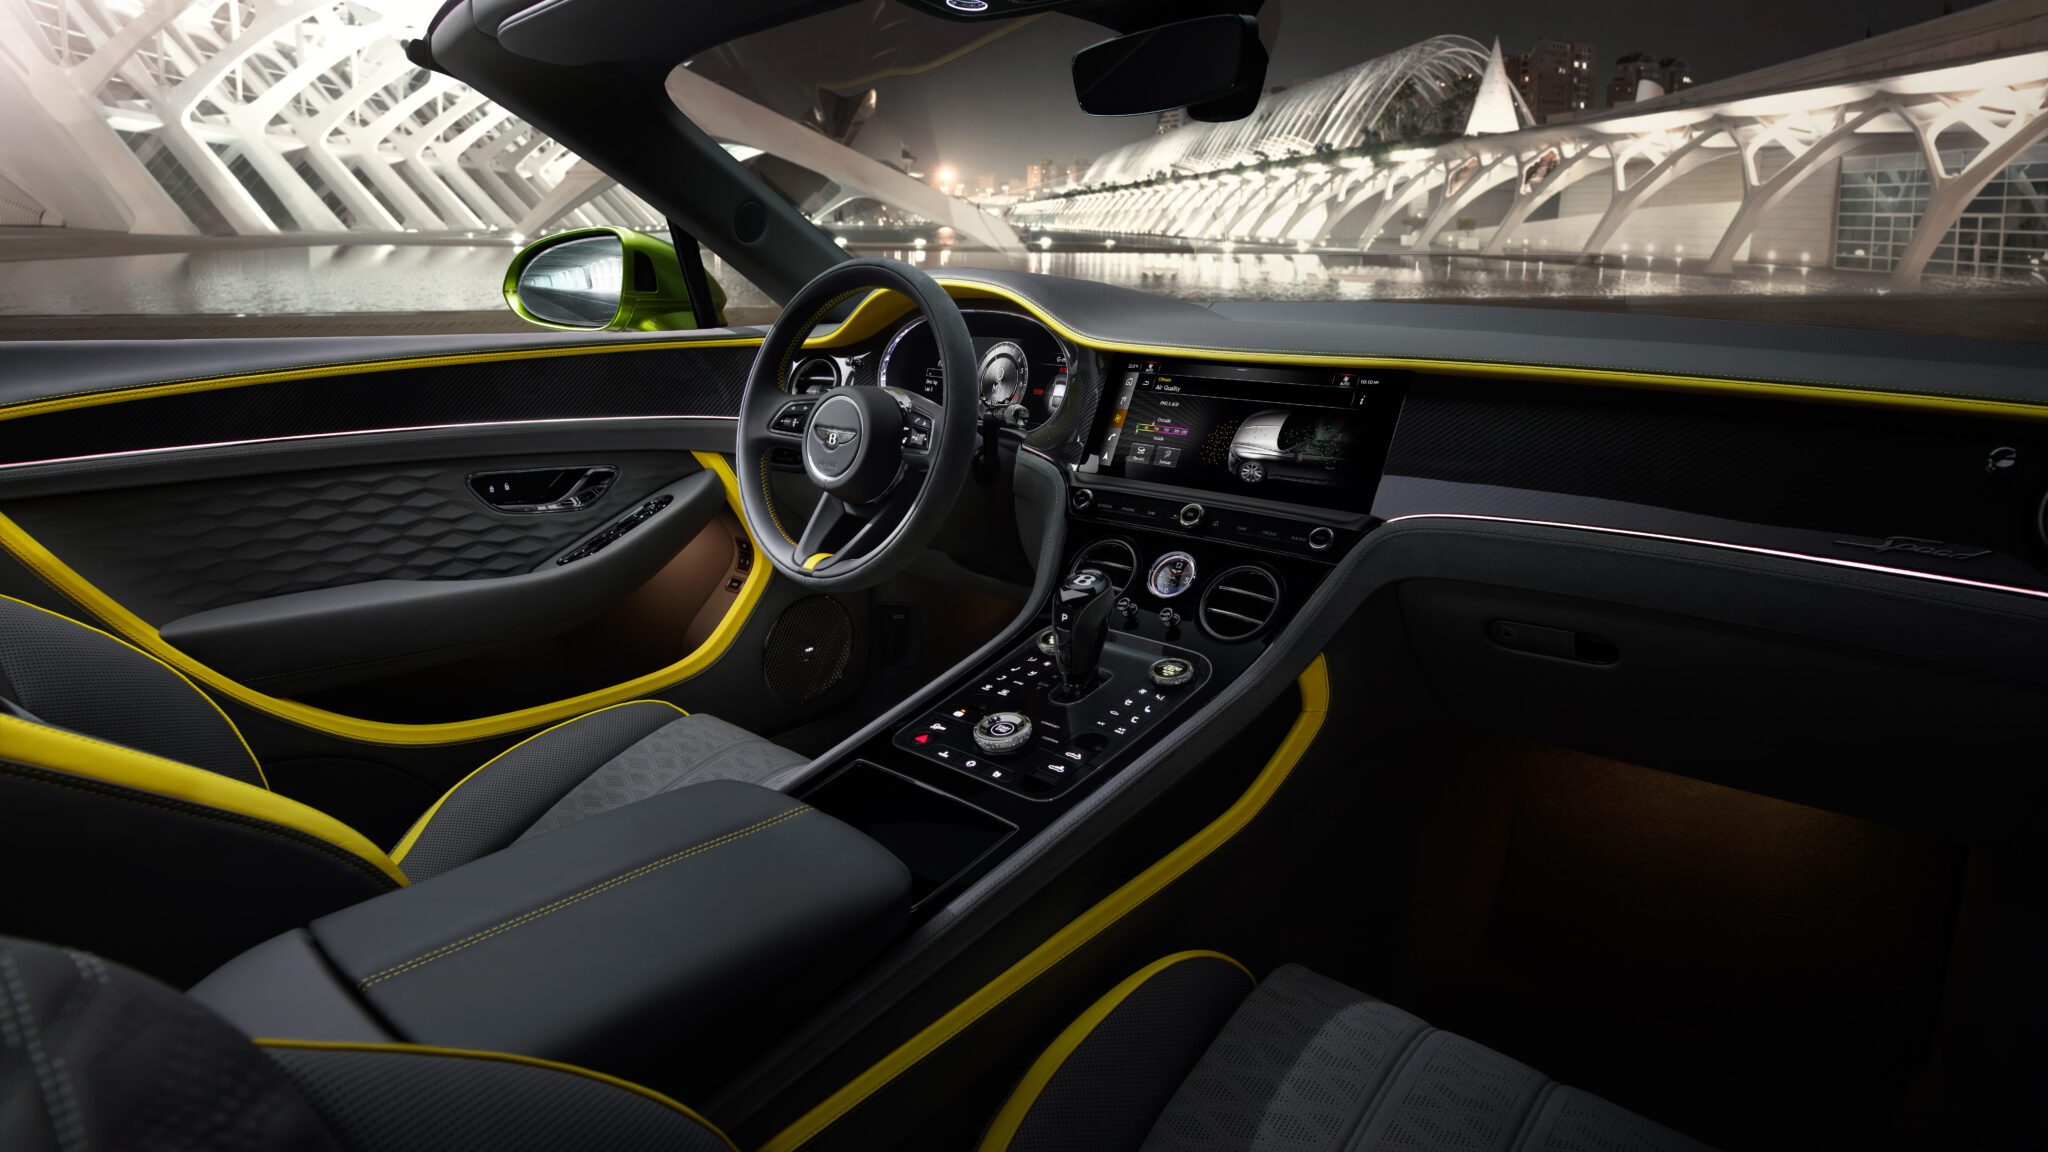 An image of a car's interior.